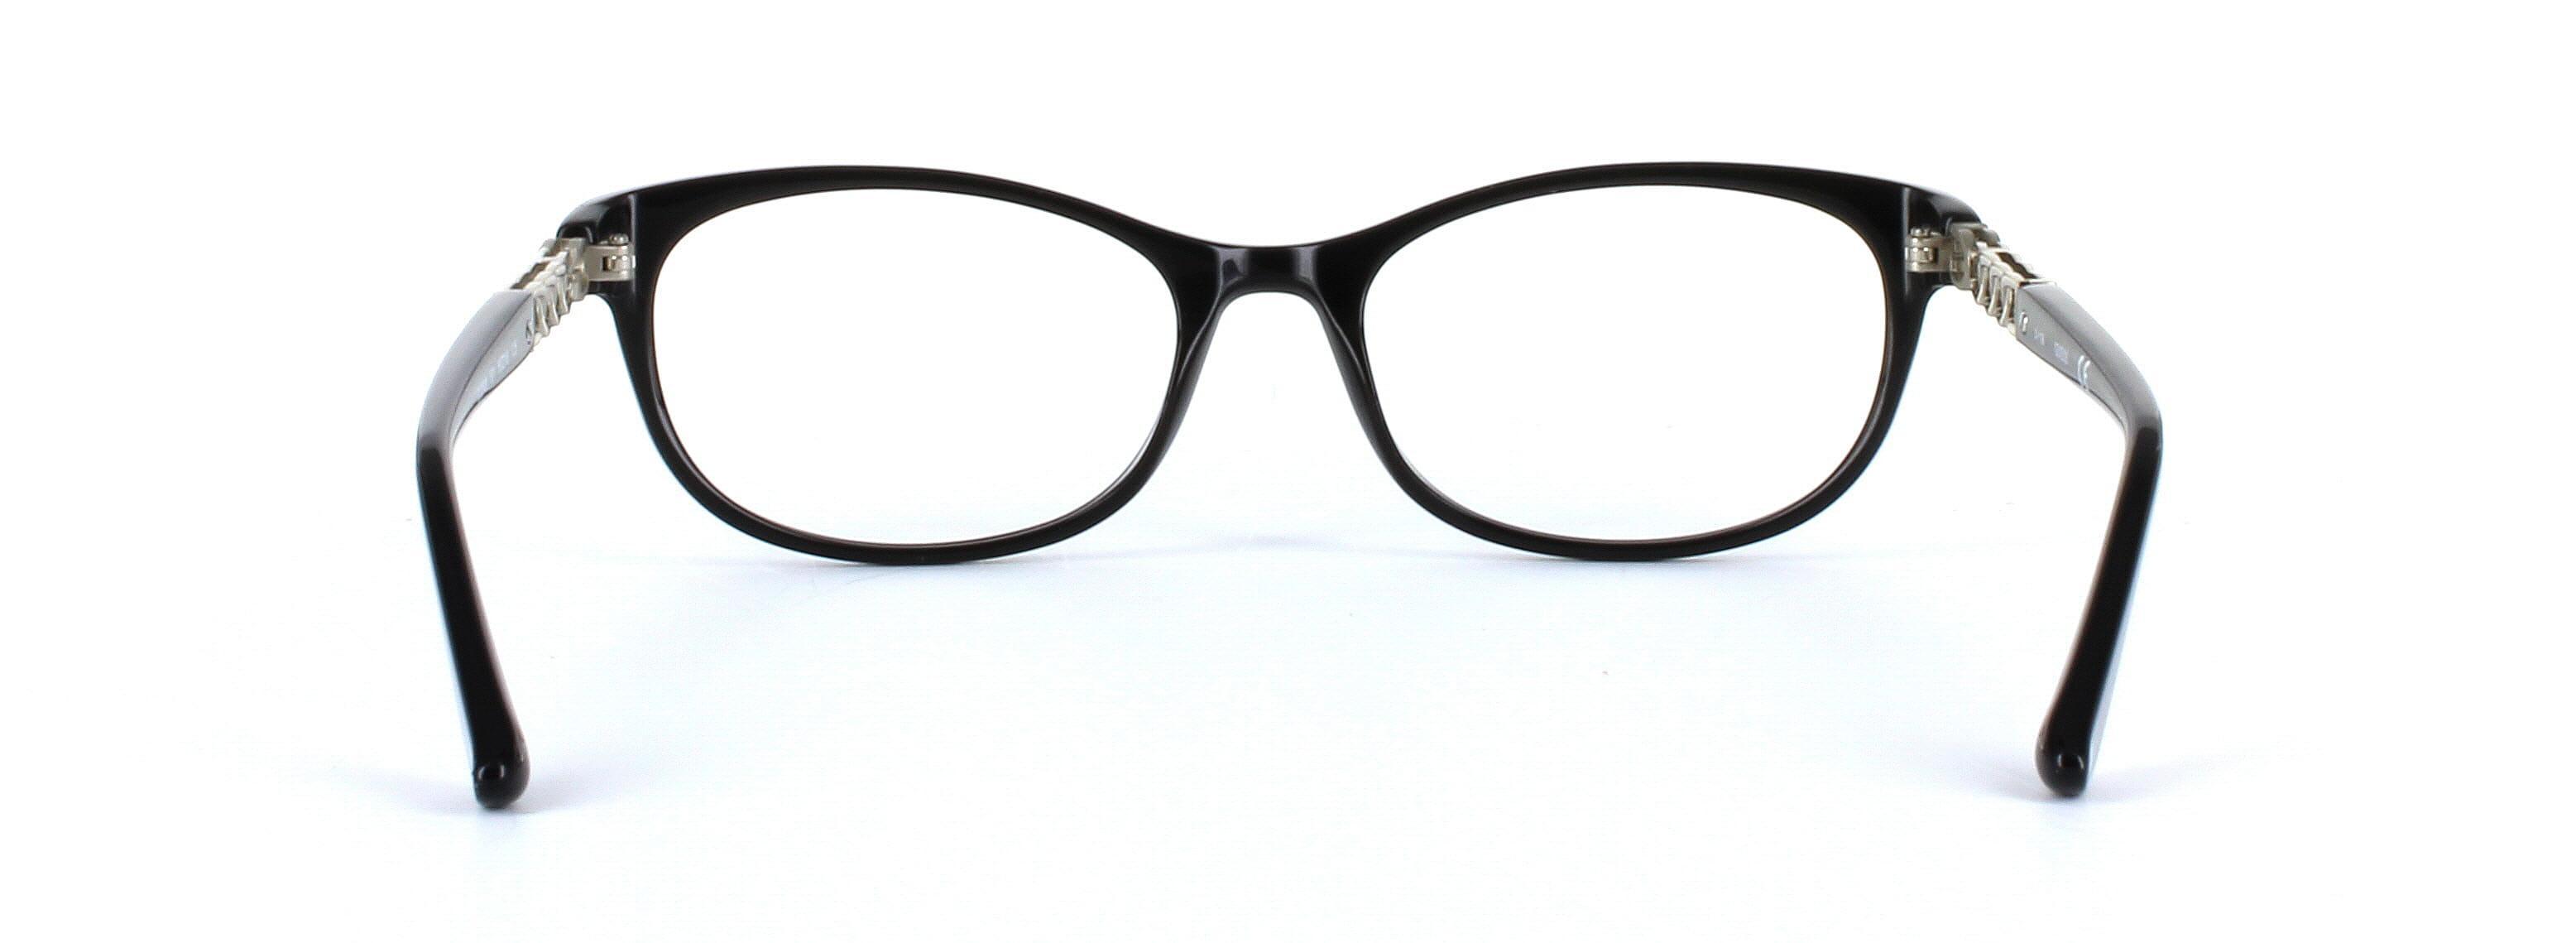 GUESS (GU2688-001) Black Full Rim Oval Acetate Glasses - Image View 3